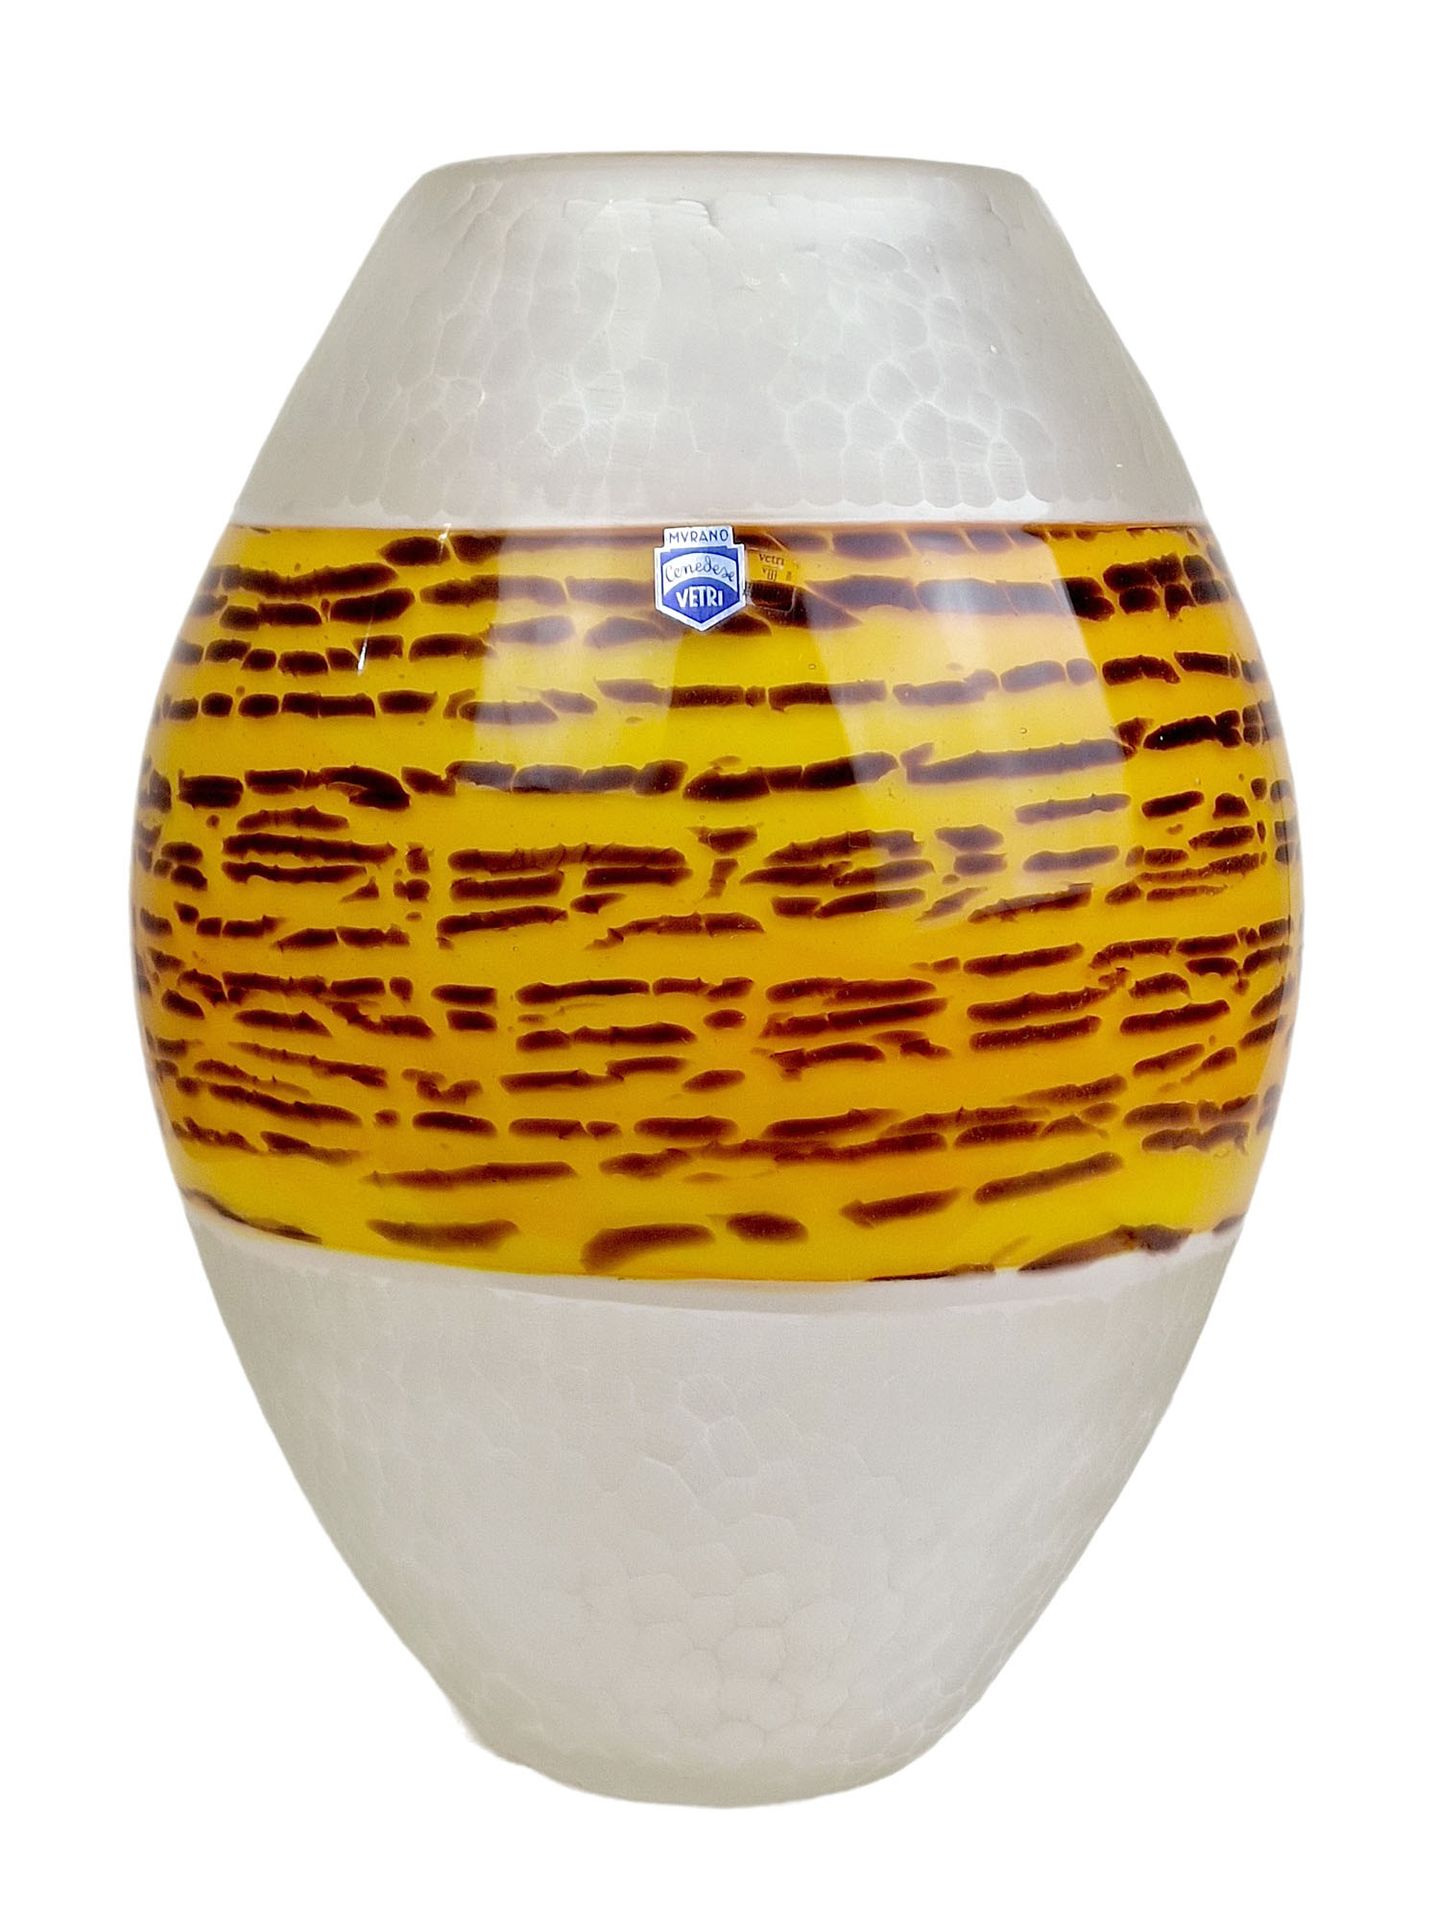 GINO CENEDESE VETRI, MURANO 大卵形花瓶 "格里马尔迪的700年



在部分磨砂玻璃中，有浅浮雕的蜂窝状装饰，双层的主体在黄色背景上&hellip;